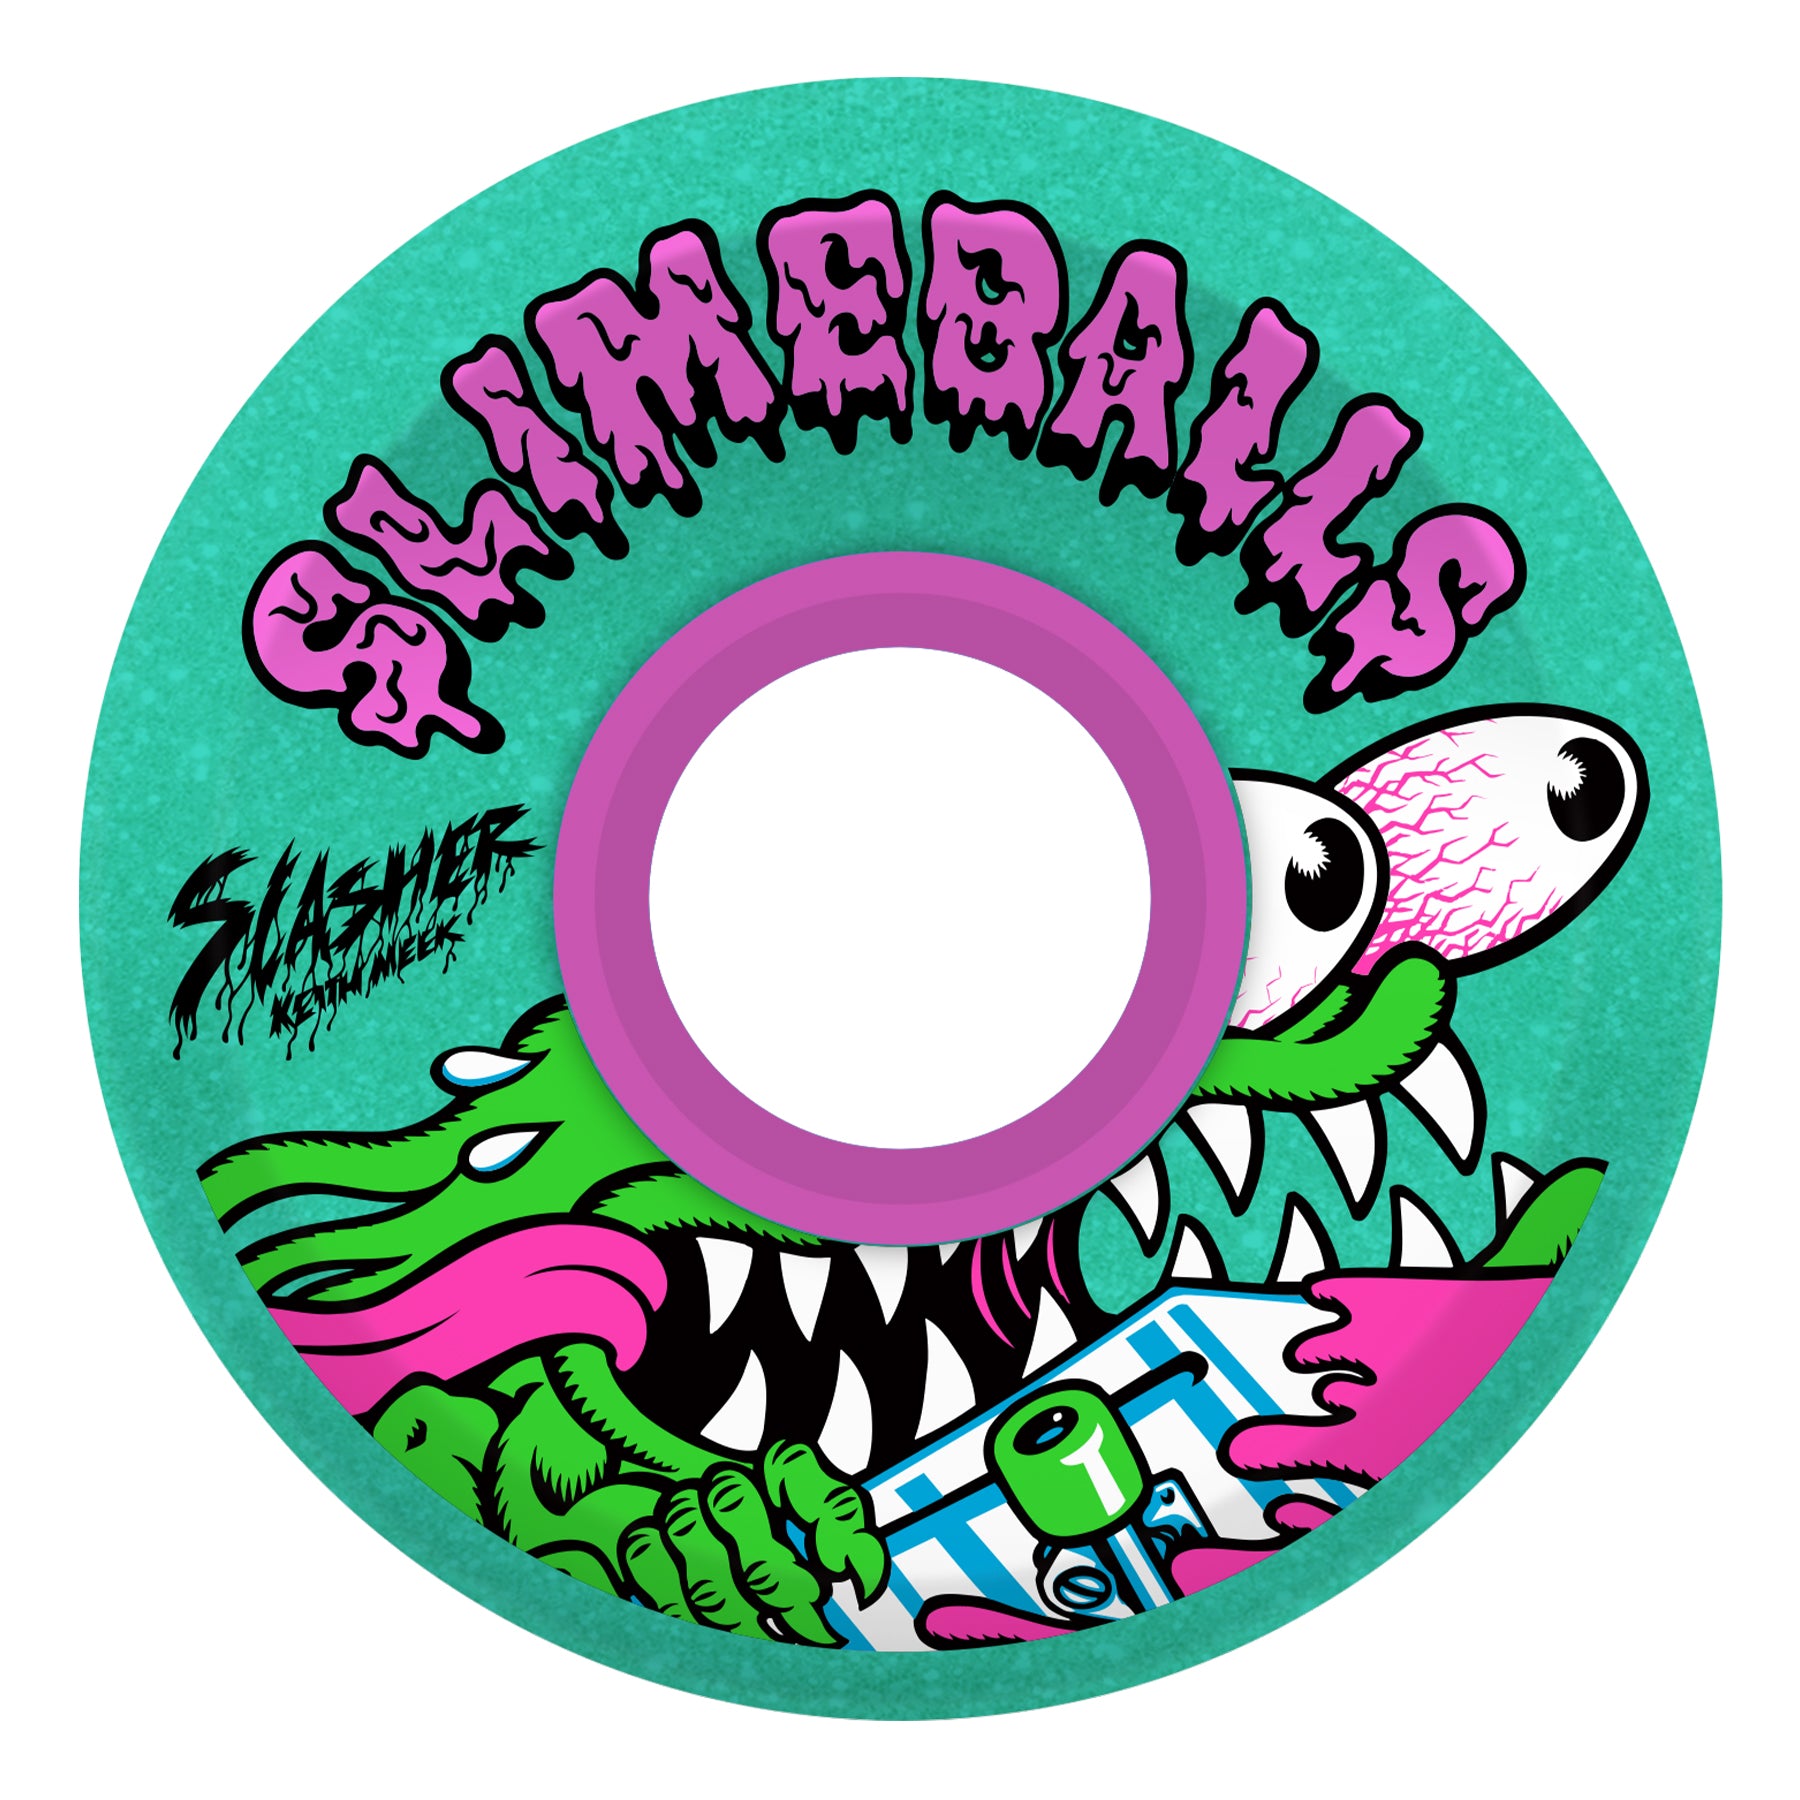 Slime Balls Wheels Meek Slasher OG Green Glitter Skateboard Wheels 78a –  Focus Boardshop